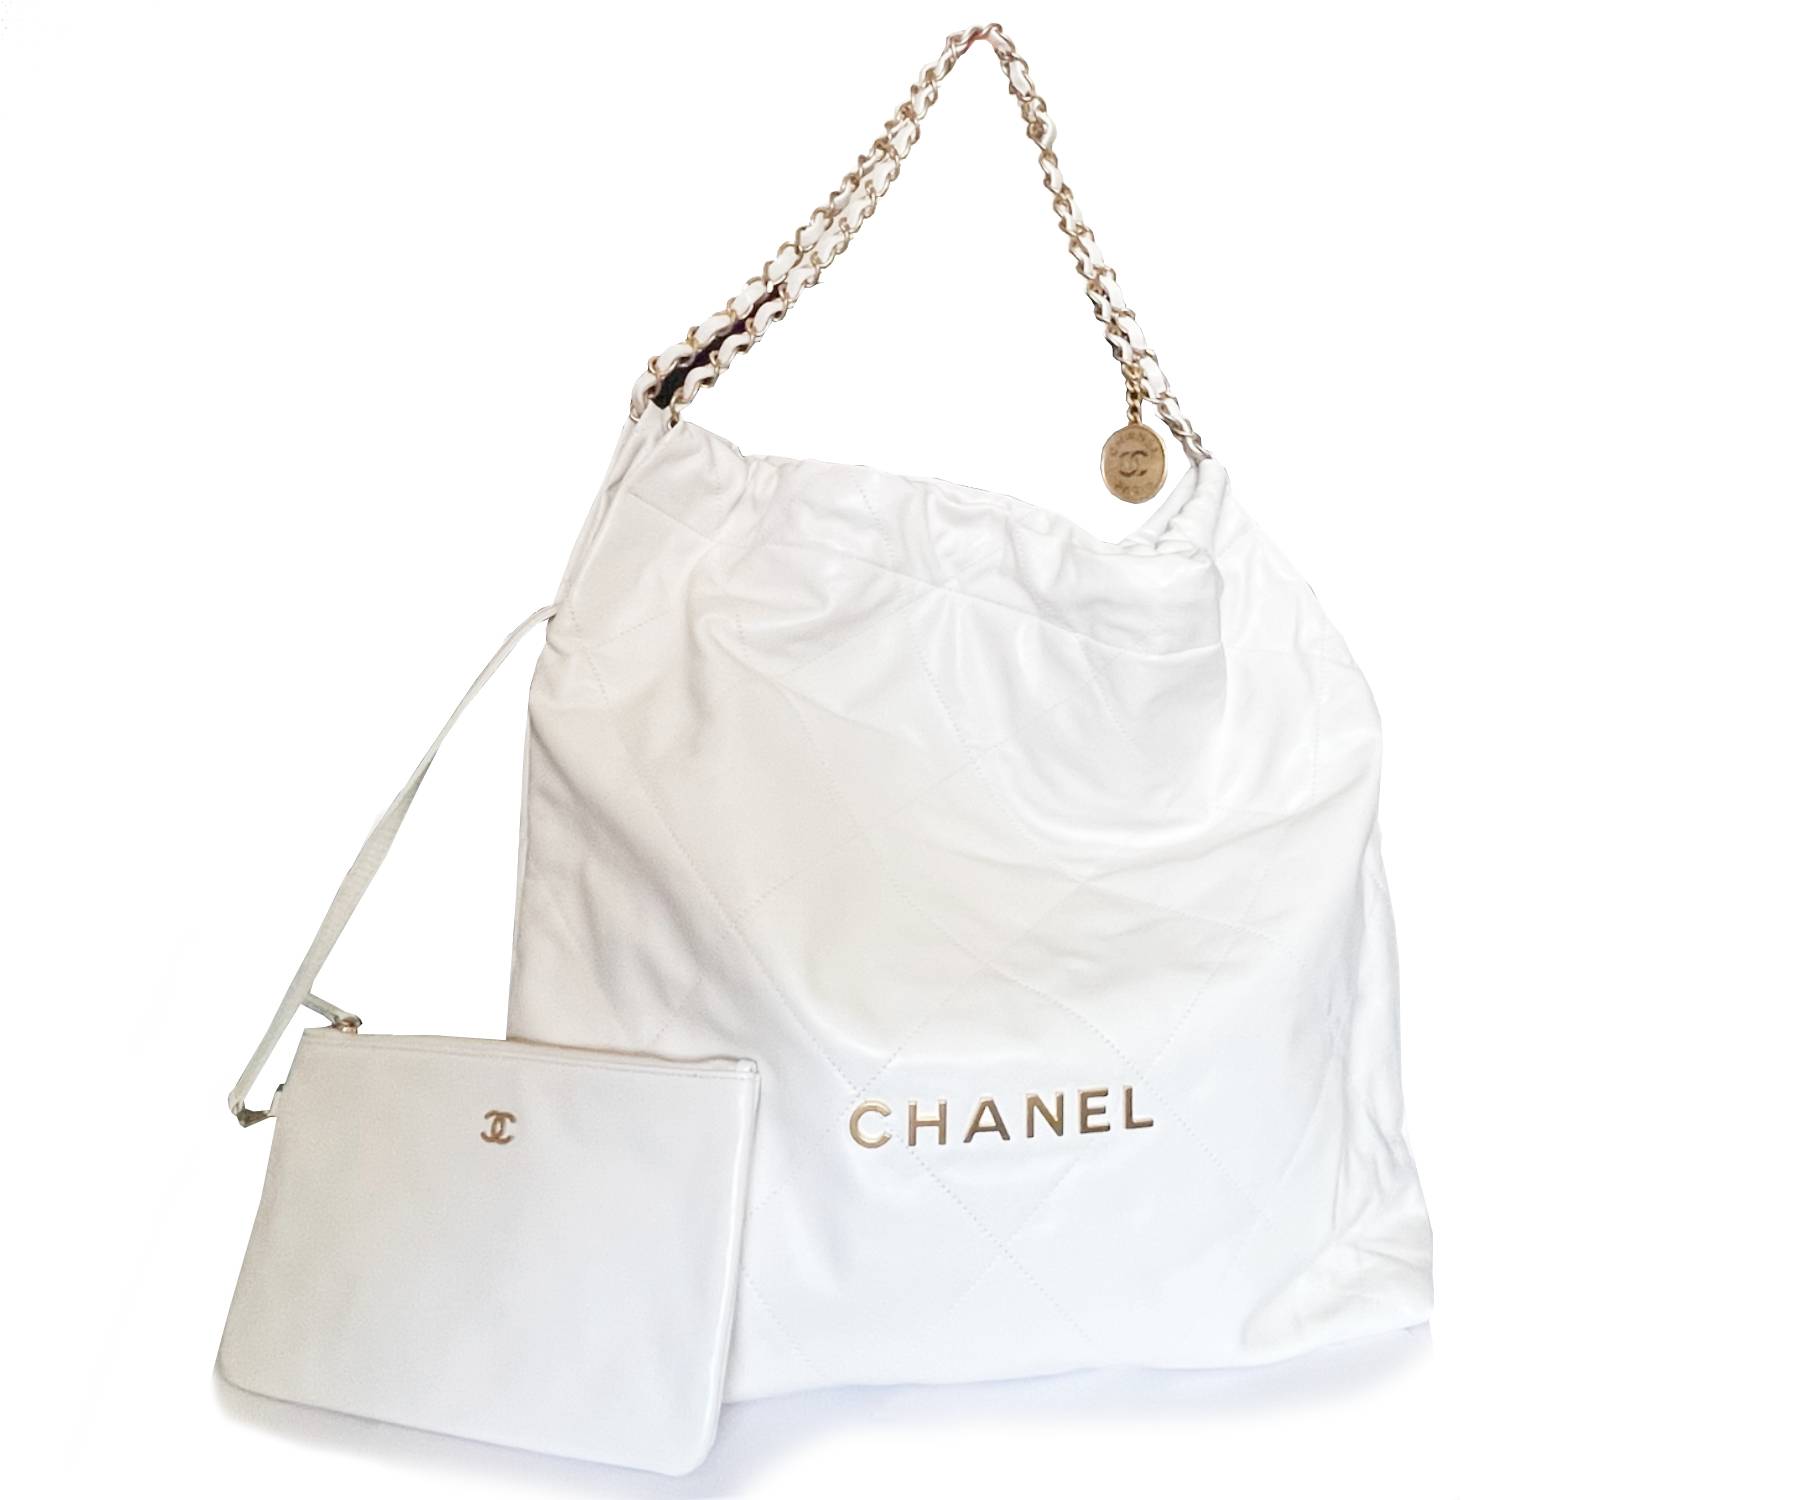 CHANEL 22 Brand New White Large Tote Shoulder Bag